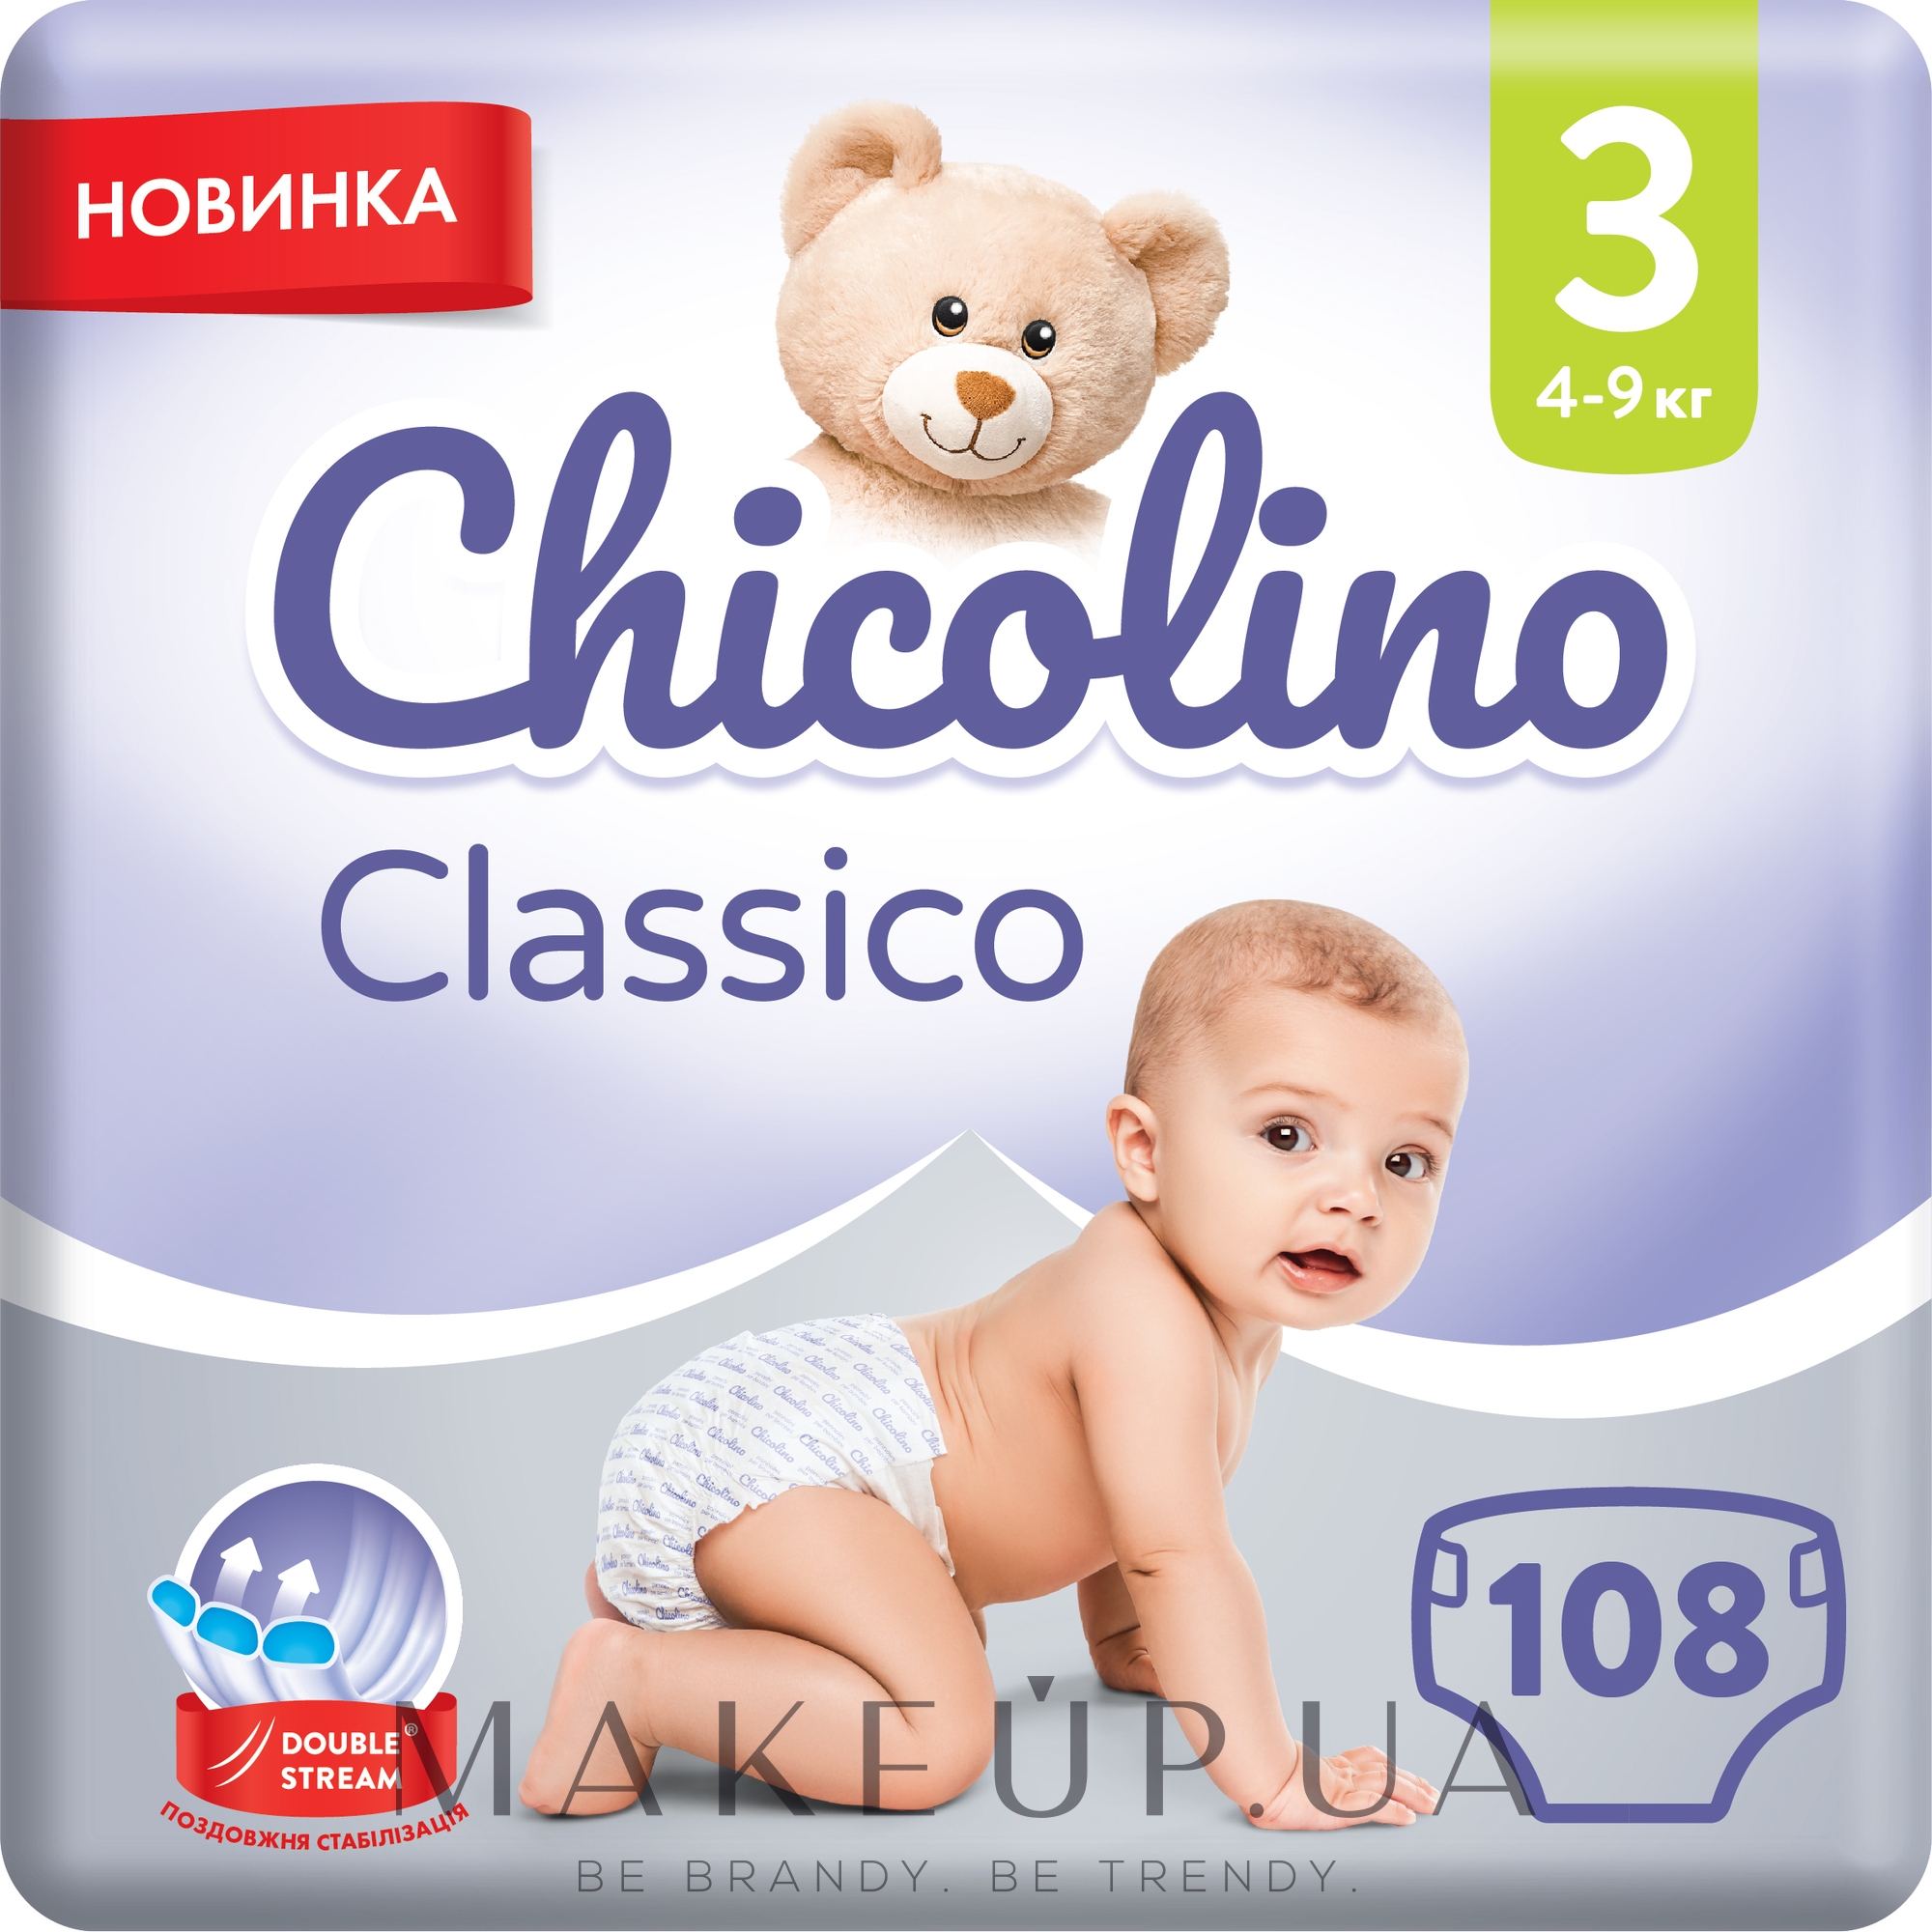 Детские подгузники "Classico", 4-9 кг, размер 3, 108 шт. - Chicolino — фото 108шт